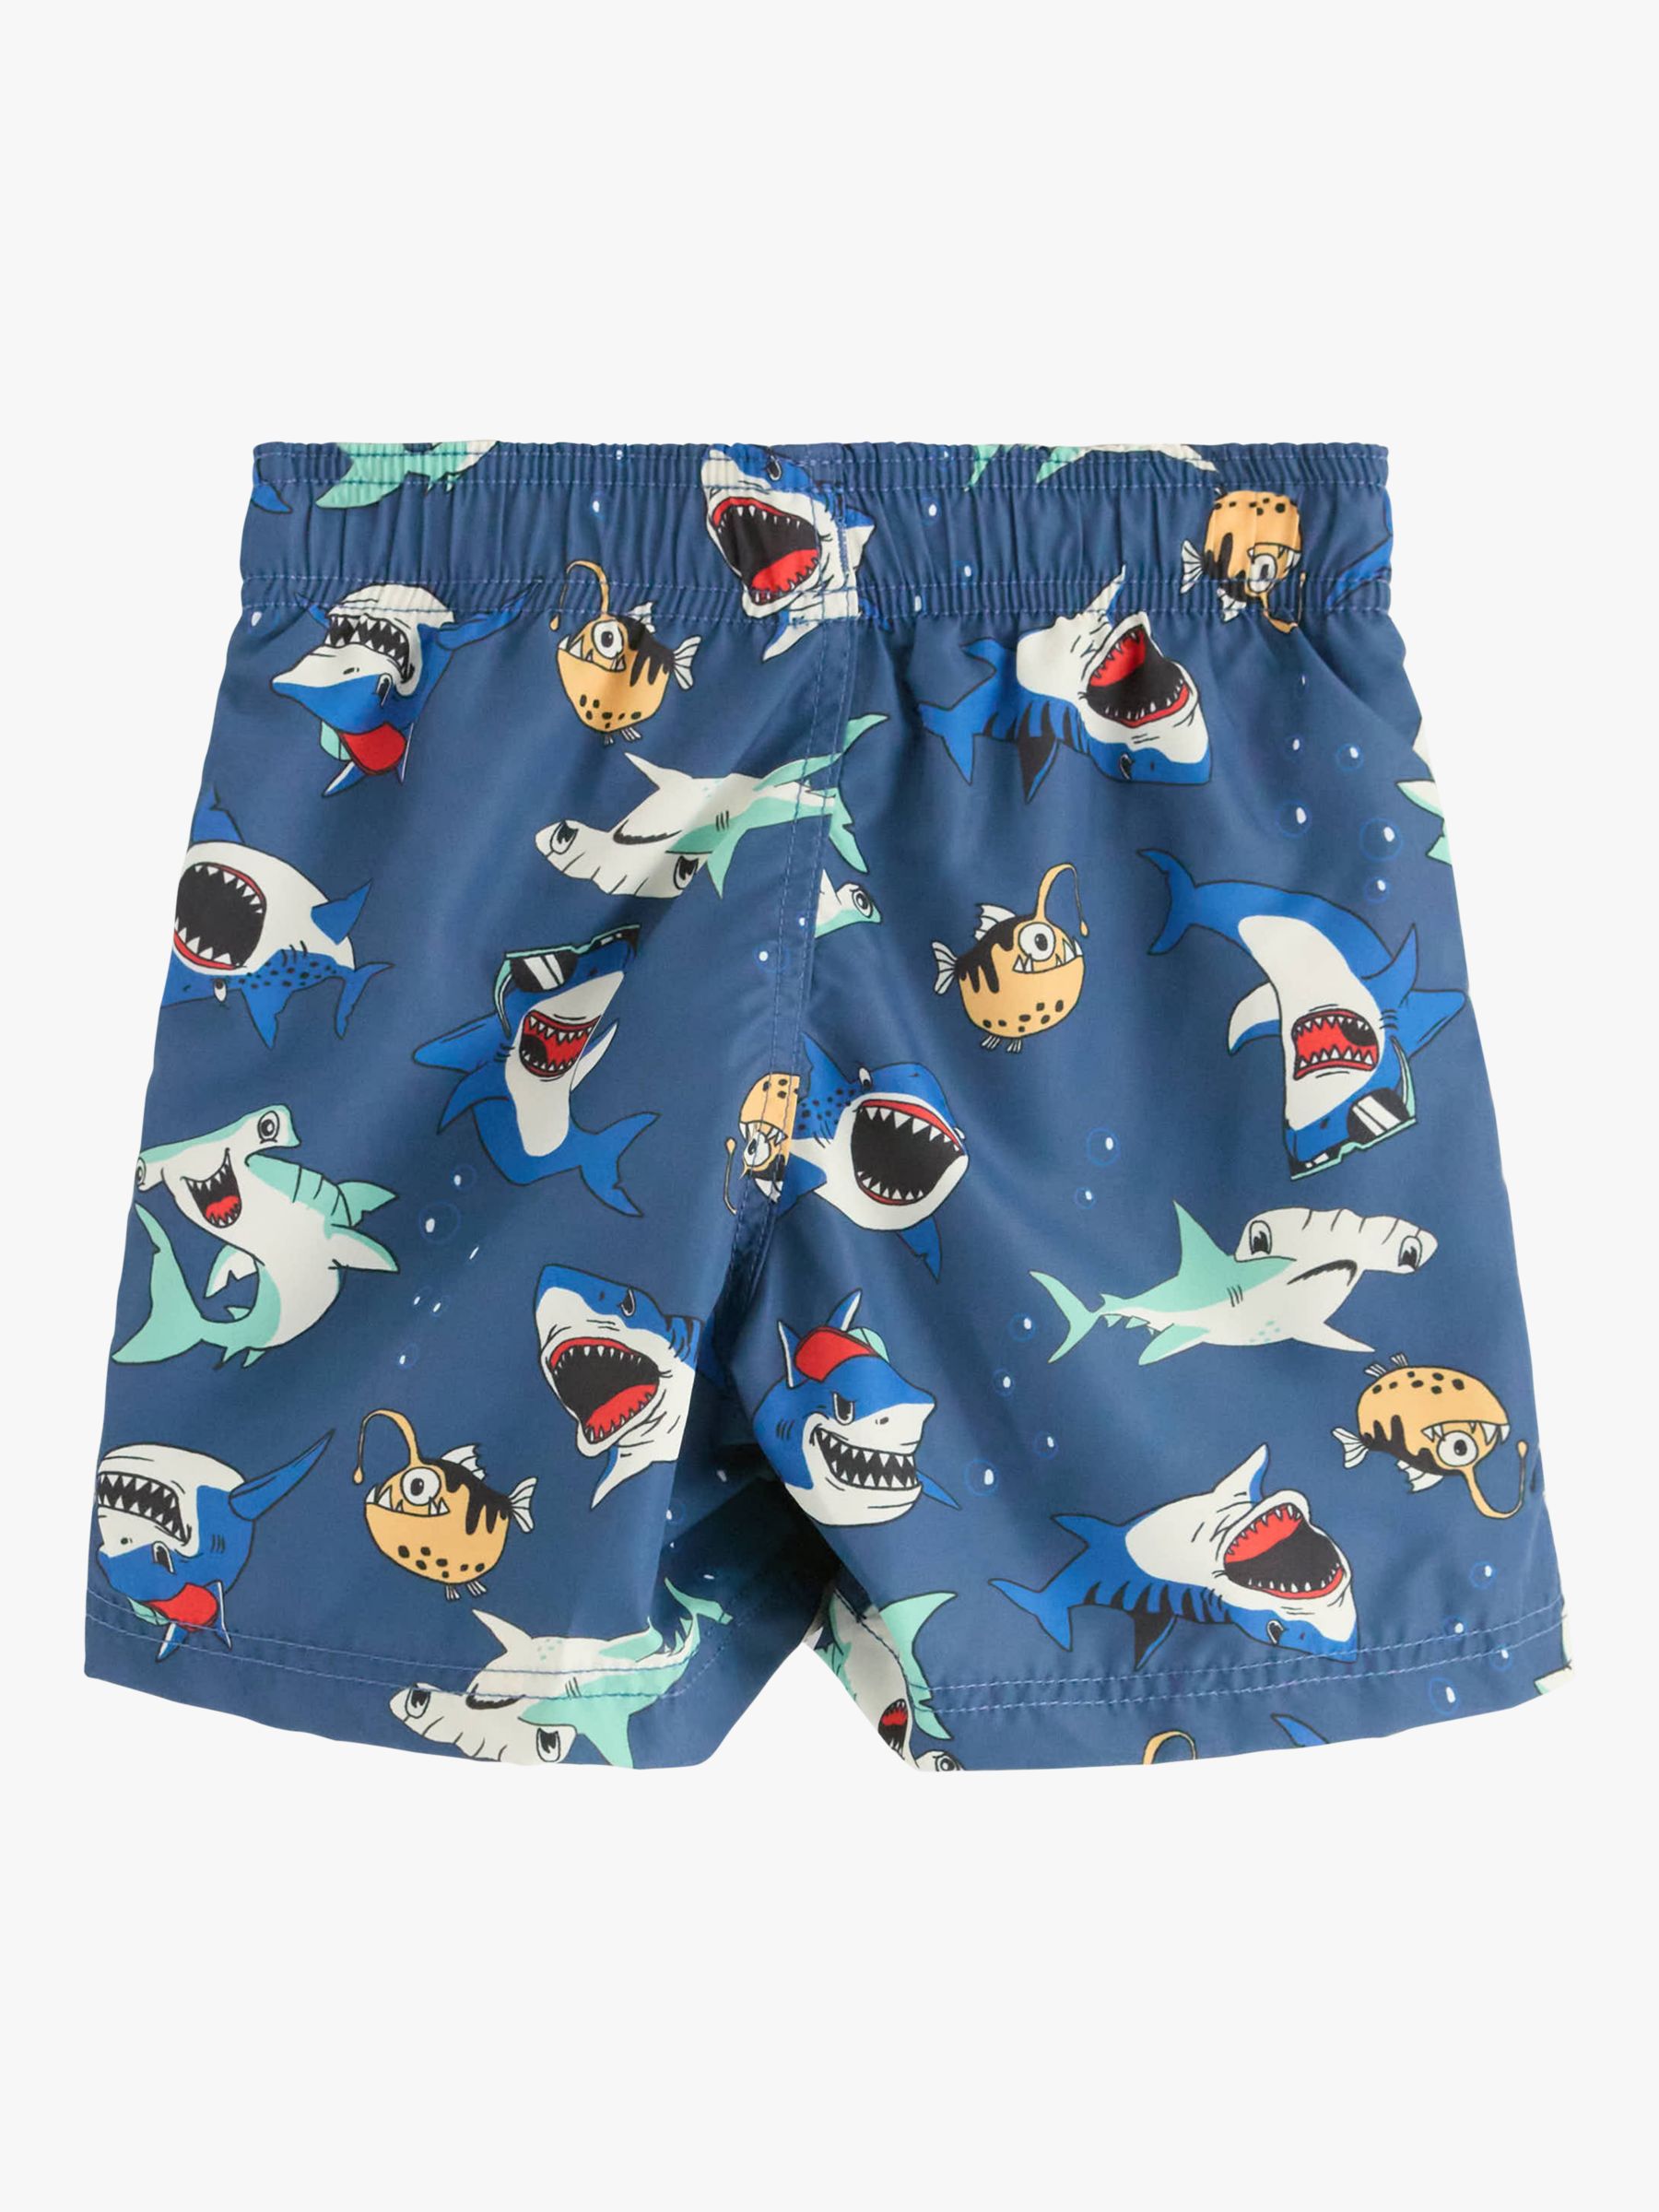 Lindex Kids' Ocean Fish Print Swim Shorts, Dark Dusty Blue, 4-6 years